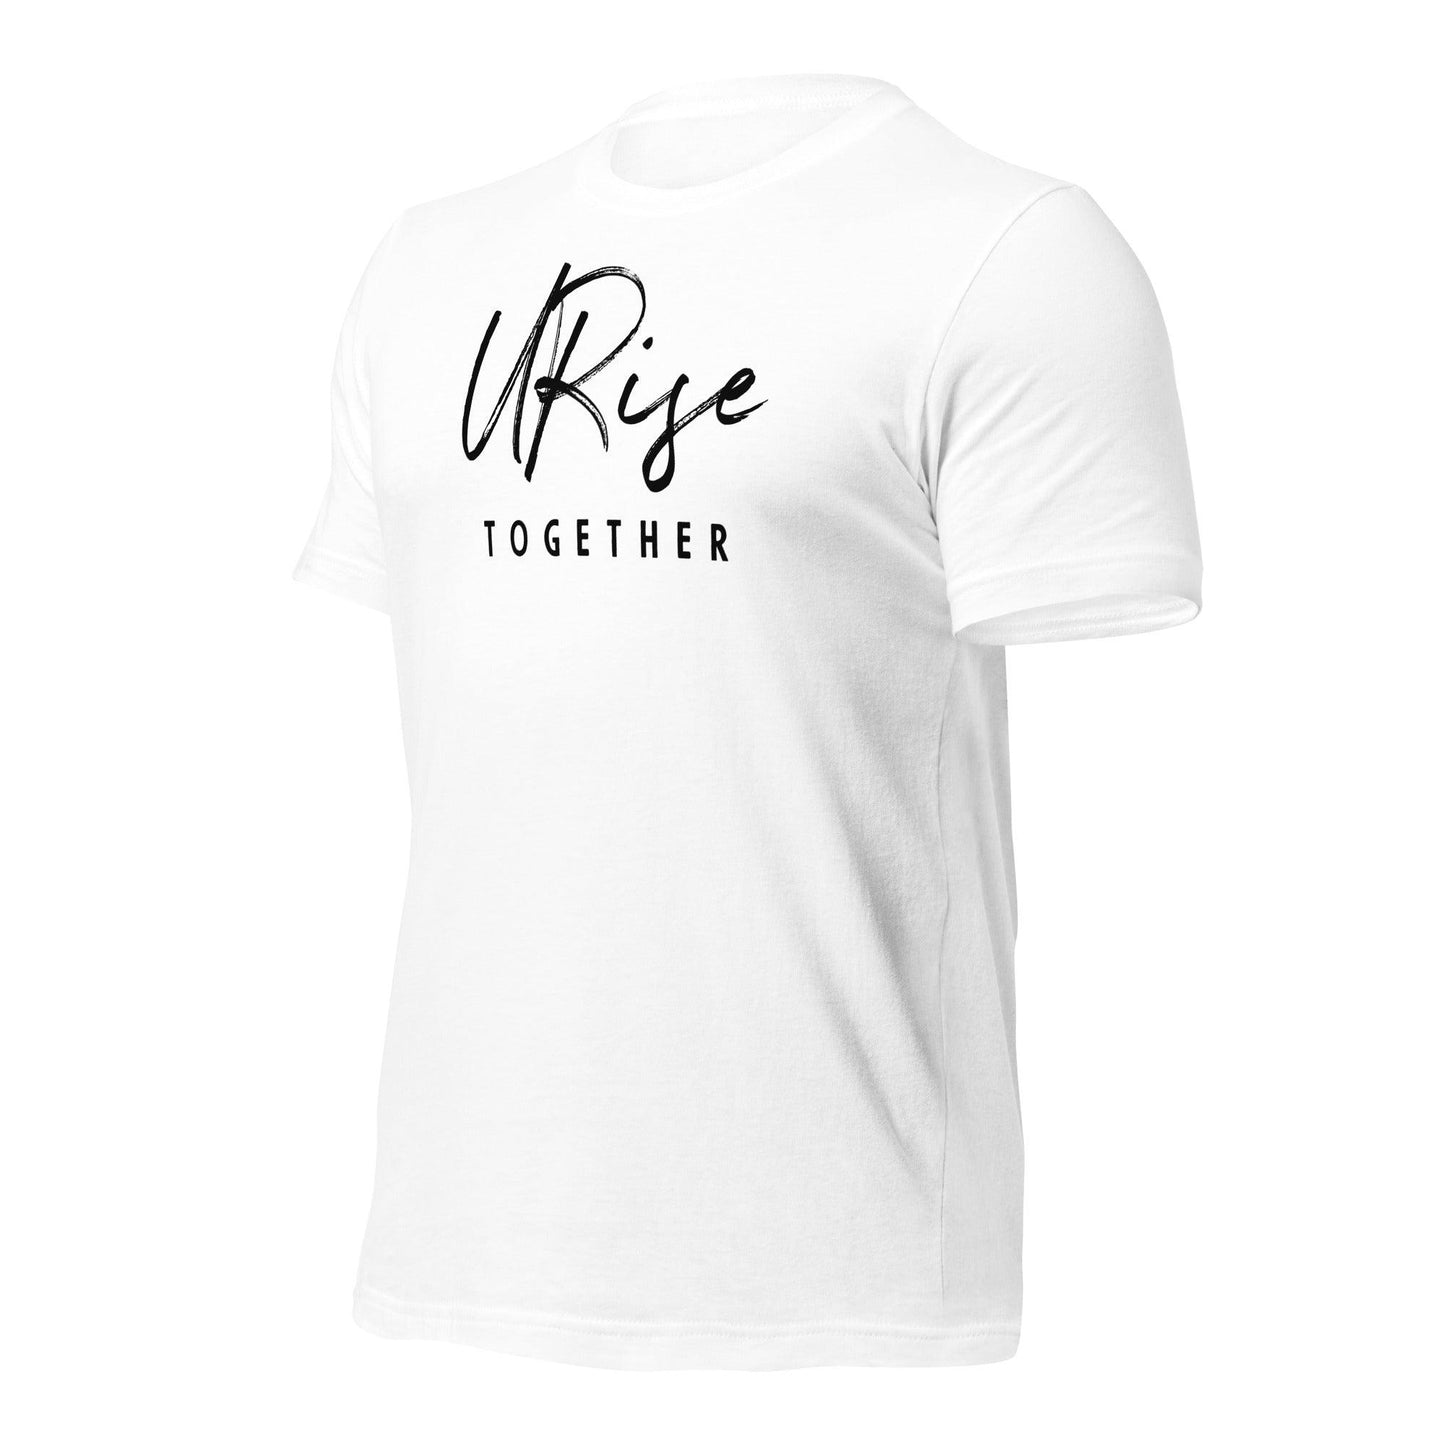 "URise Together" T-Shirt - White - URiseTogetherApparel